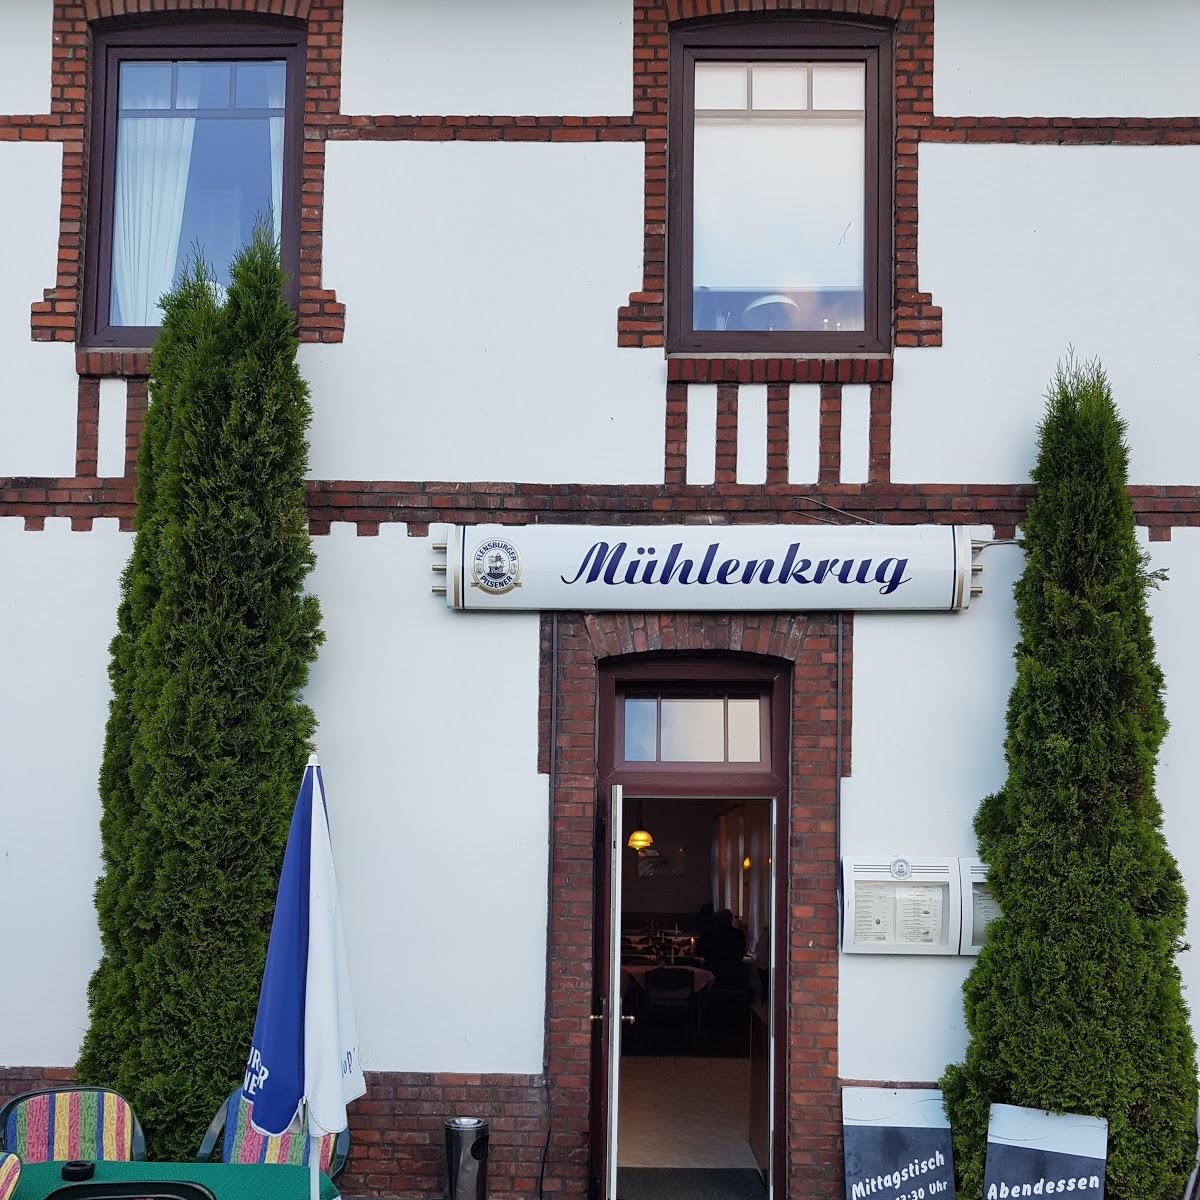 Restaurant "Mühlenkrug" in Boren